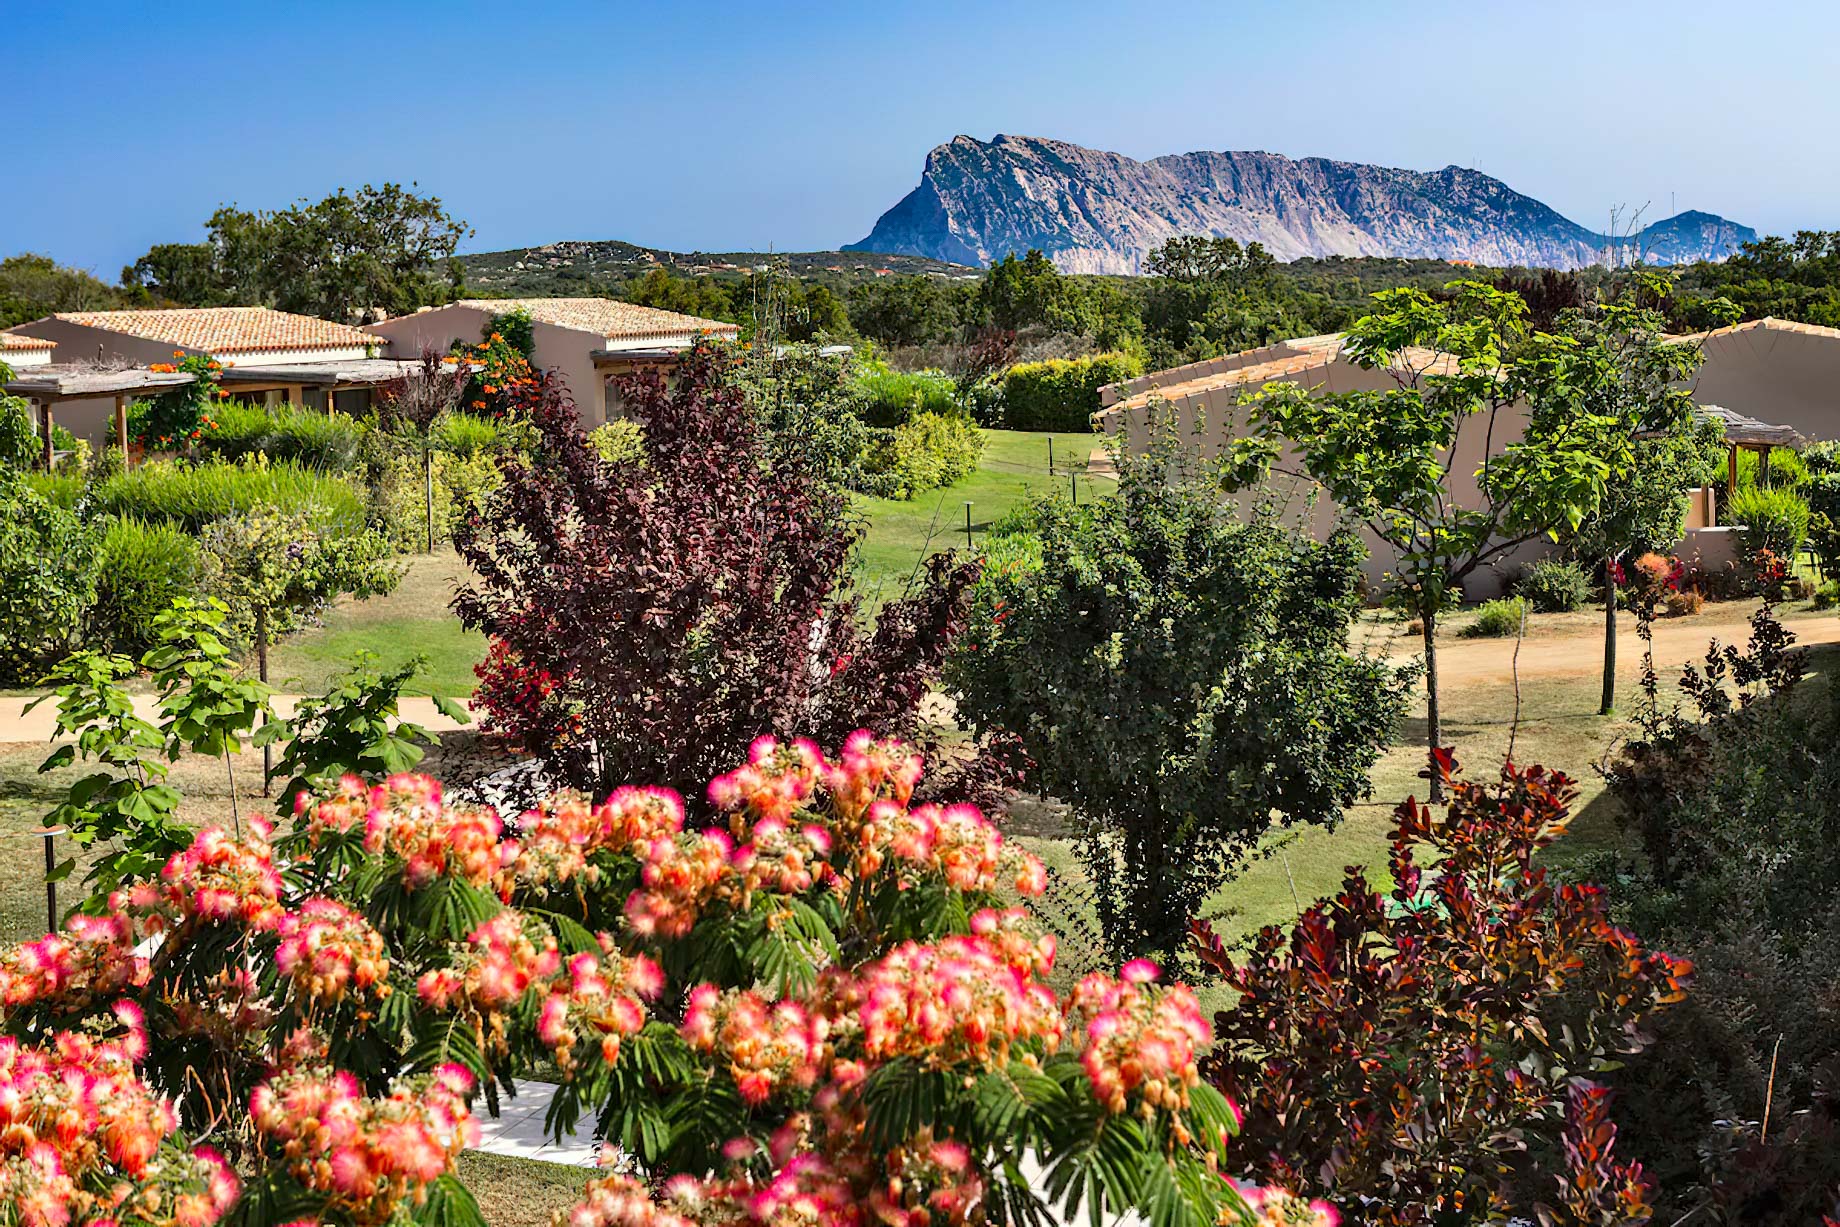 Baglioni Resort Sardinia – San Teodoro, Sardegna, Italy – Resort Property